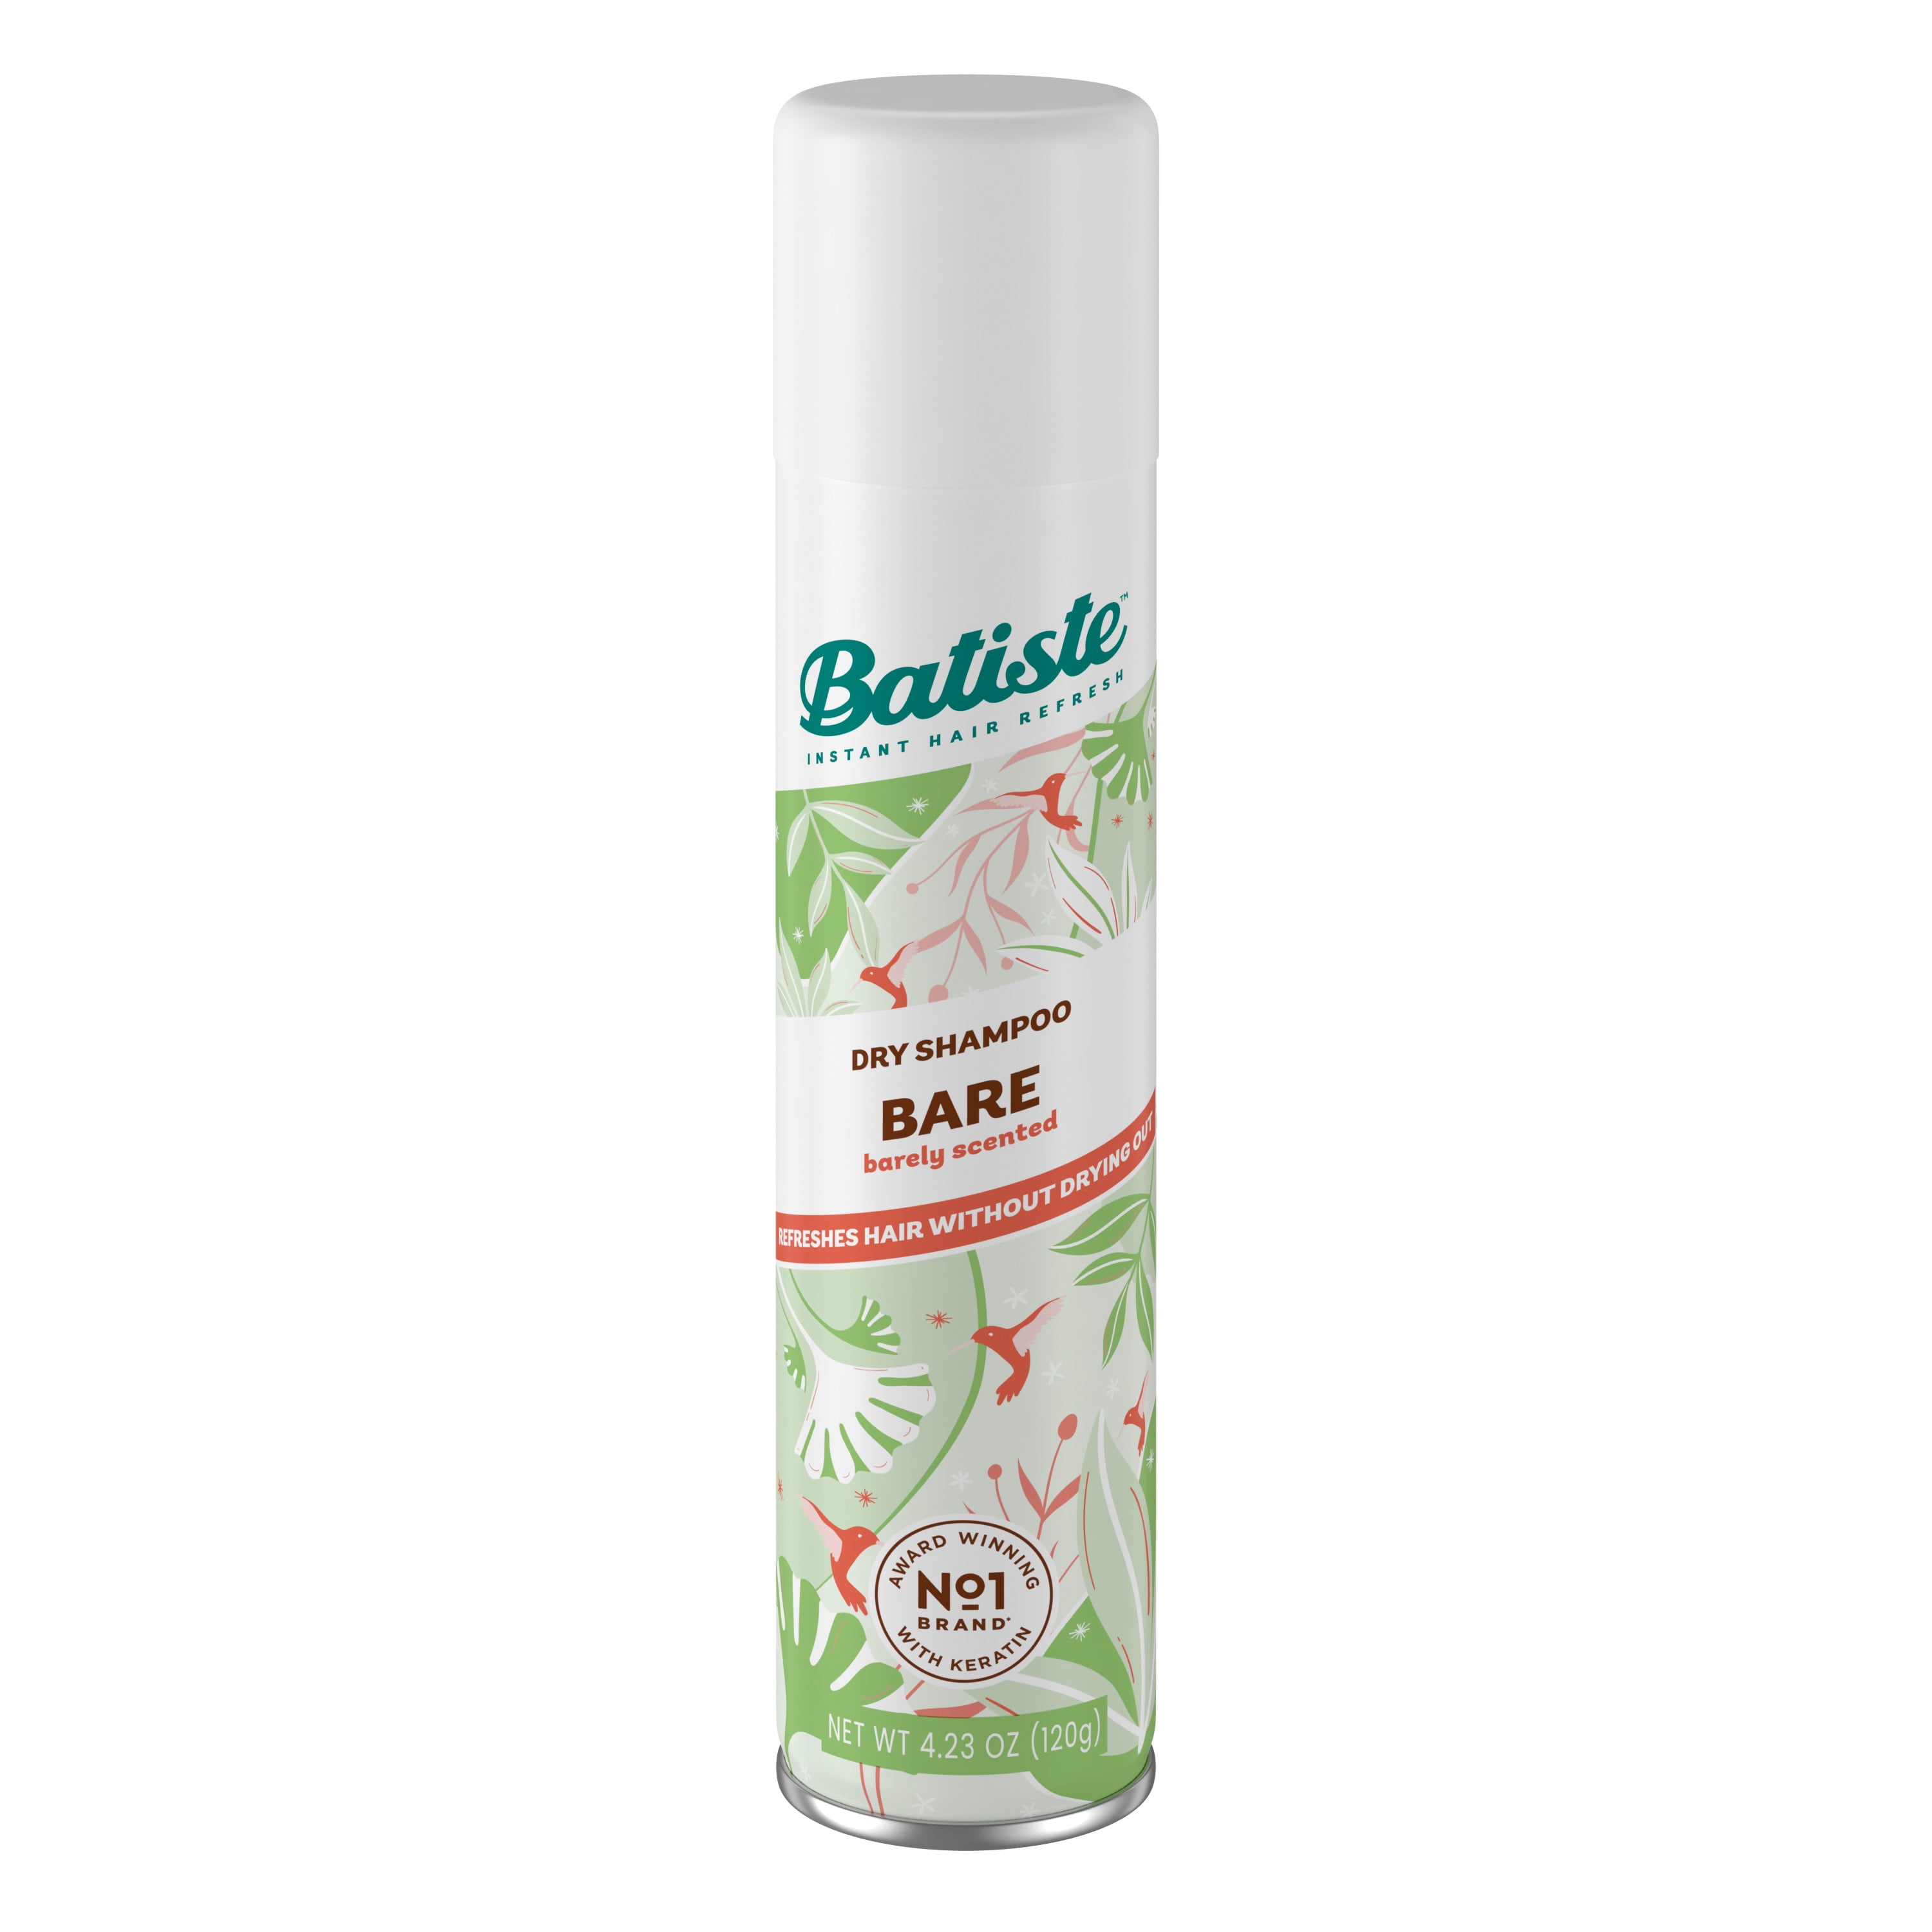 Batiste Dry Shampoo, Bare Fragrance, - Packaging May Vary - Walmart .com